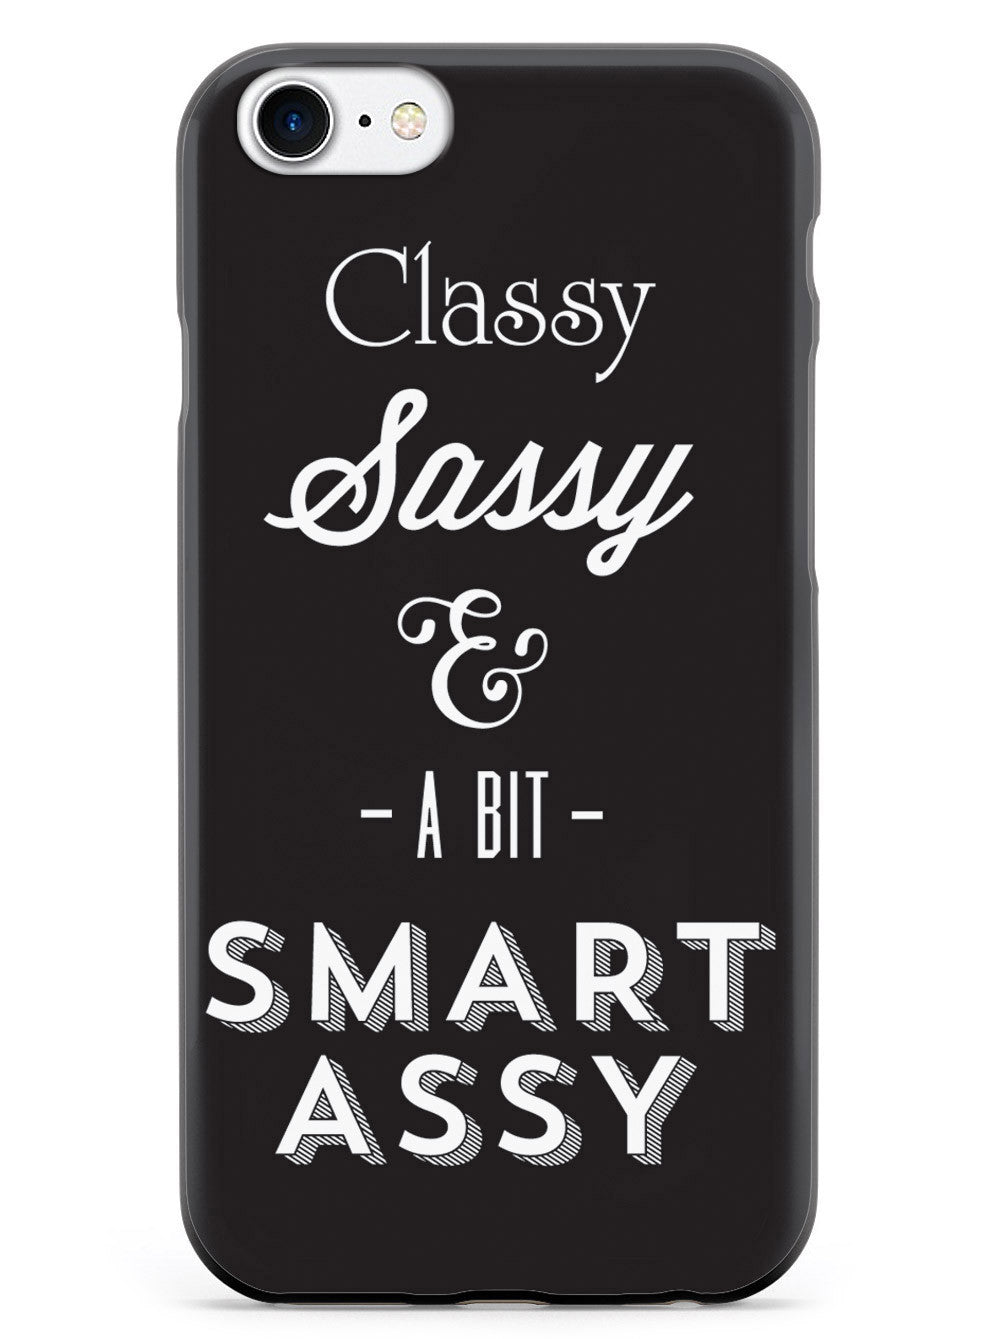 Classy, Sassy, Smart Assy Case